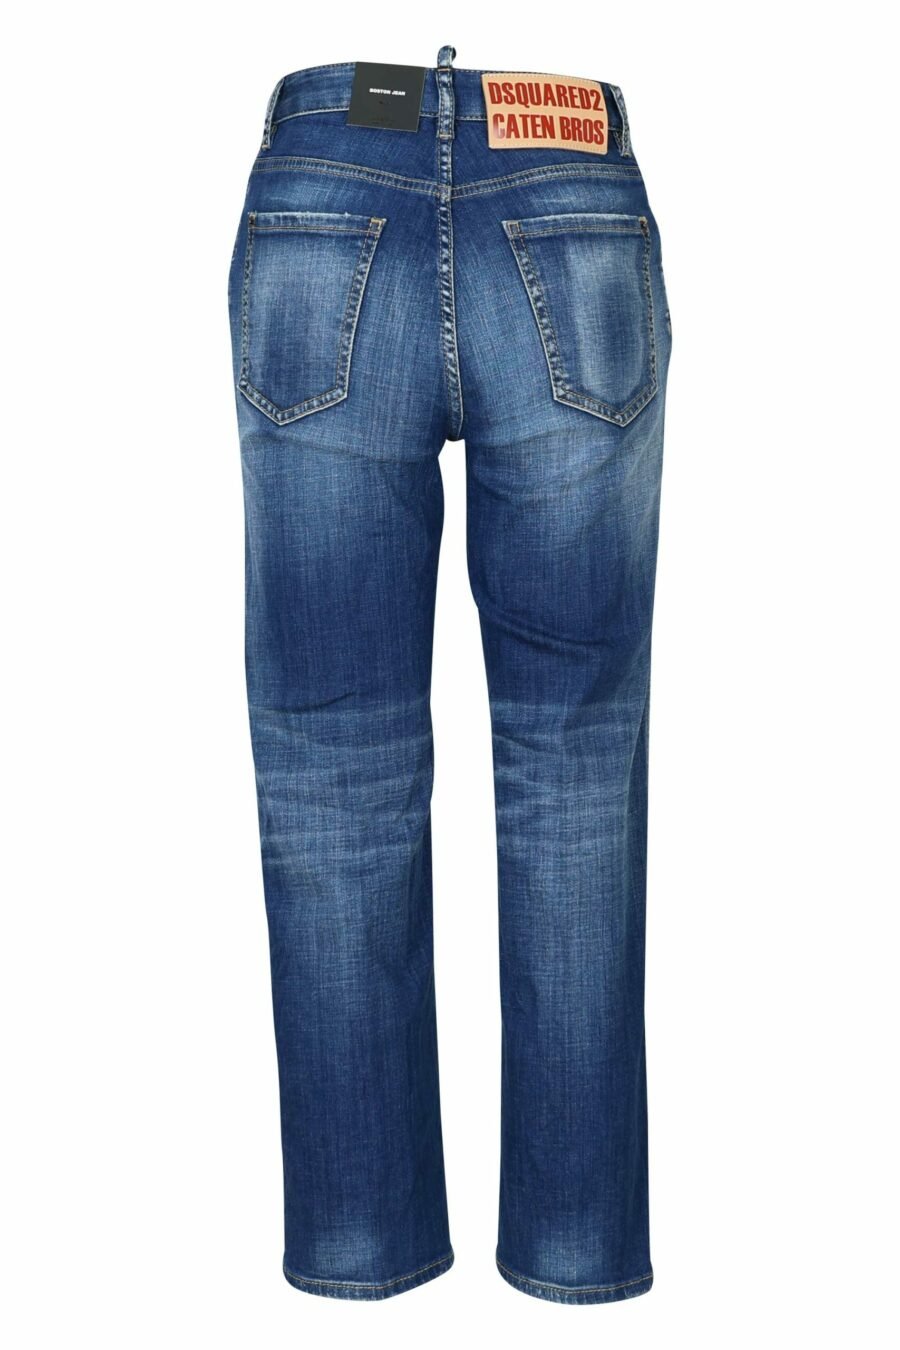 Blaue "Boston Jeans" getragene Hose - 8054148460044 2 skaliert